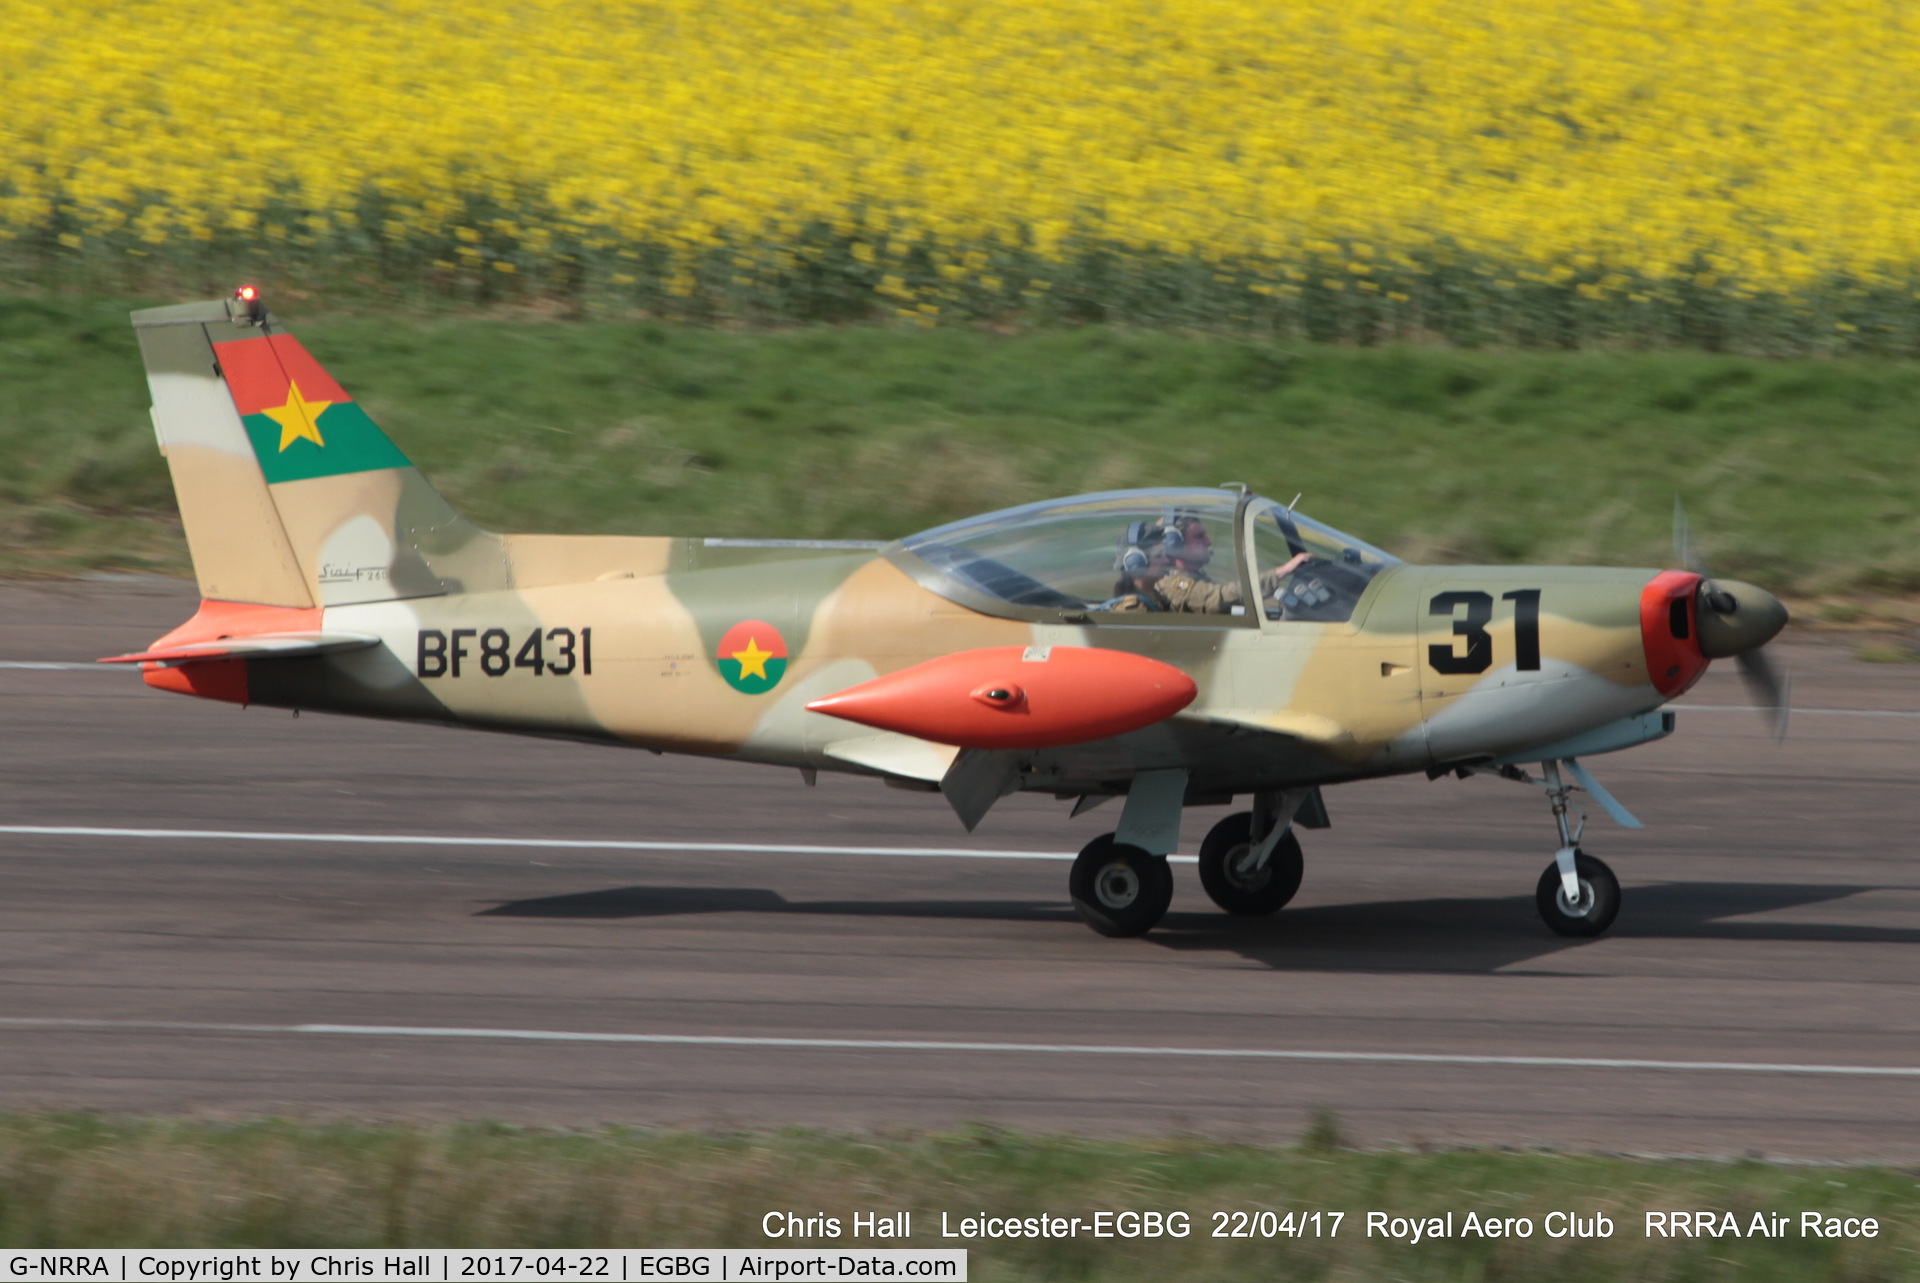 G-NRRA, 1968 SIAI-Marchetti SF-260W Warrior C/N 116, Royal Aero Club 3R's air race